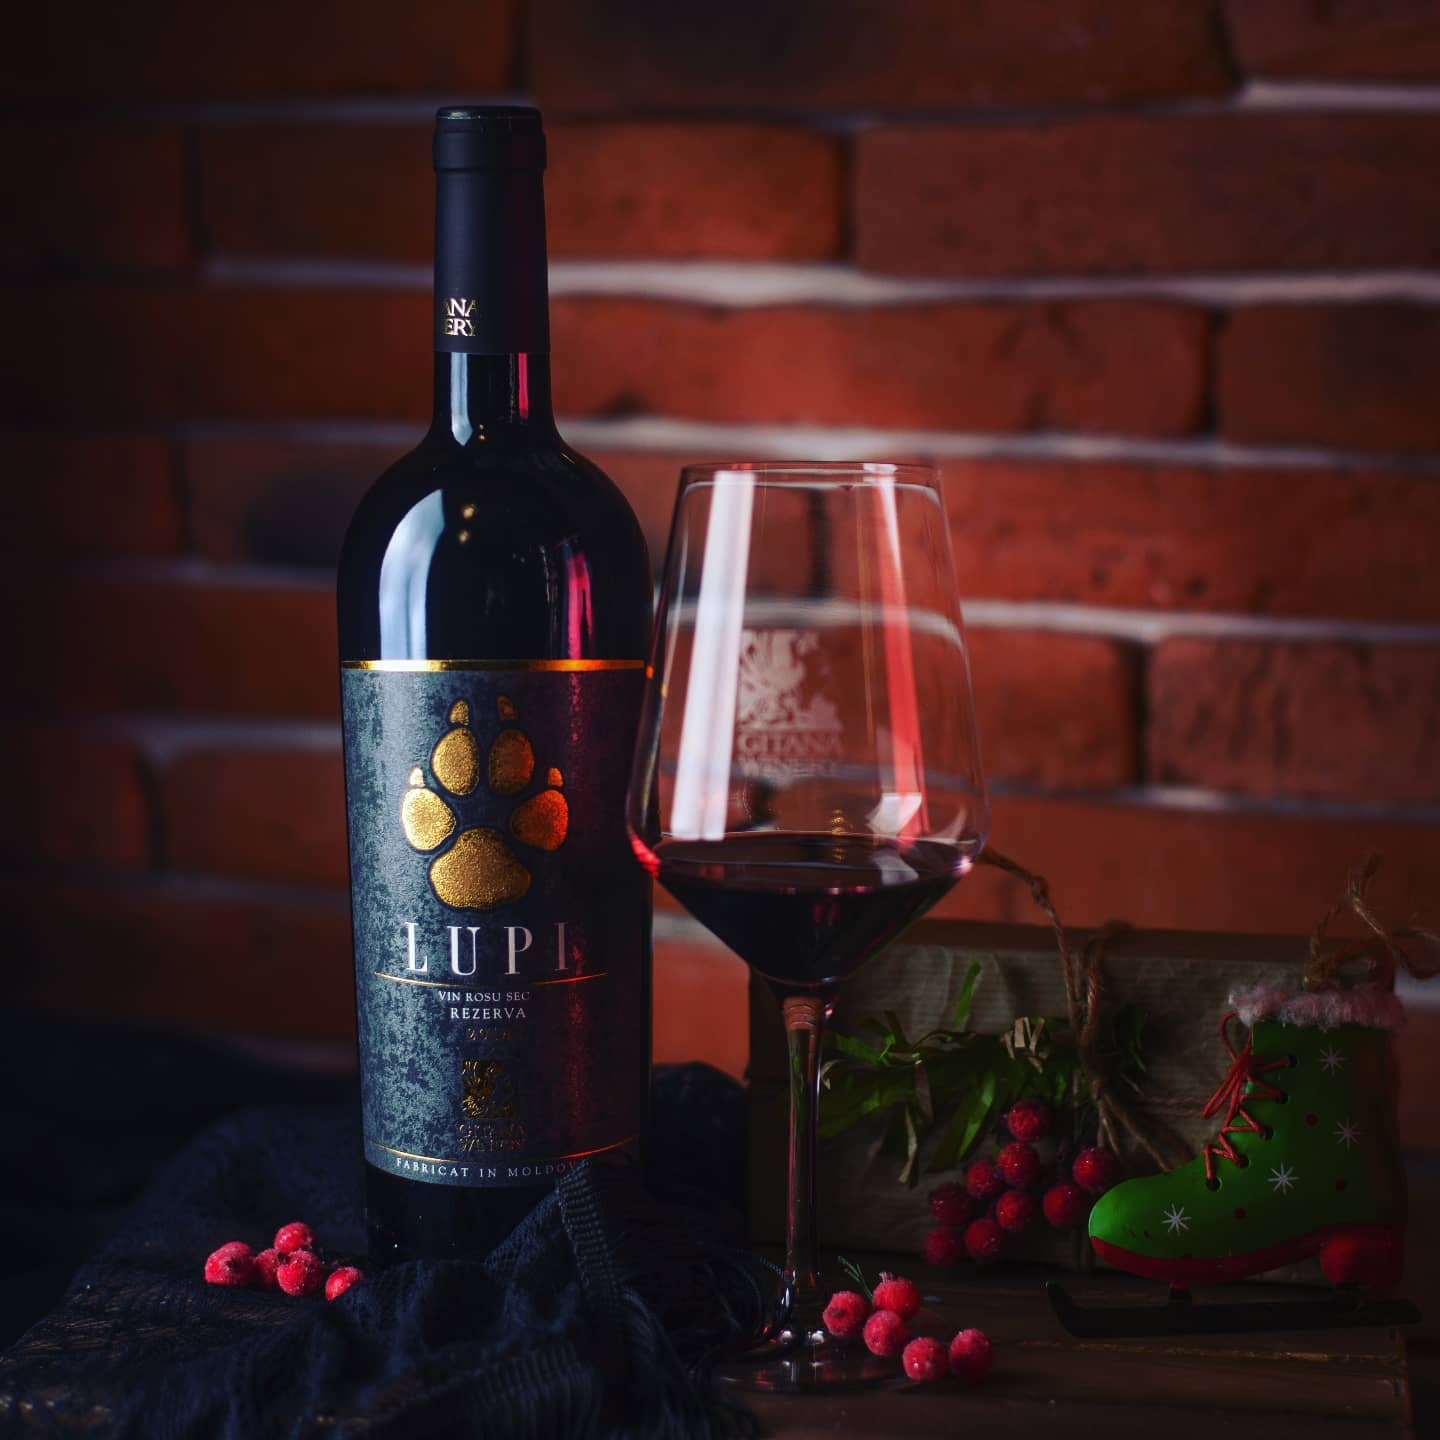 Gitana, Lupi - Best Wines in Moldova